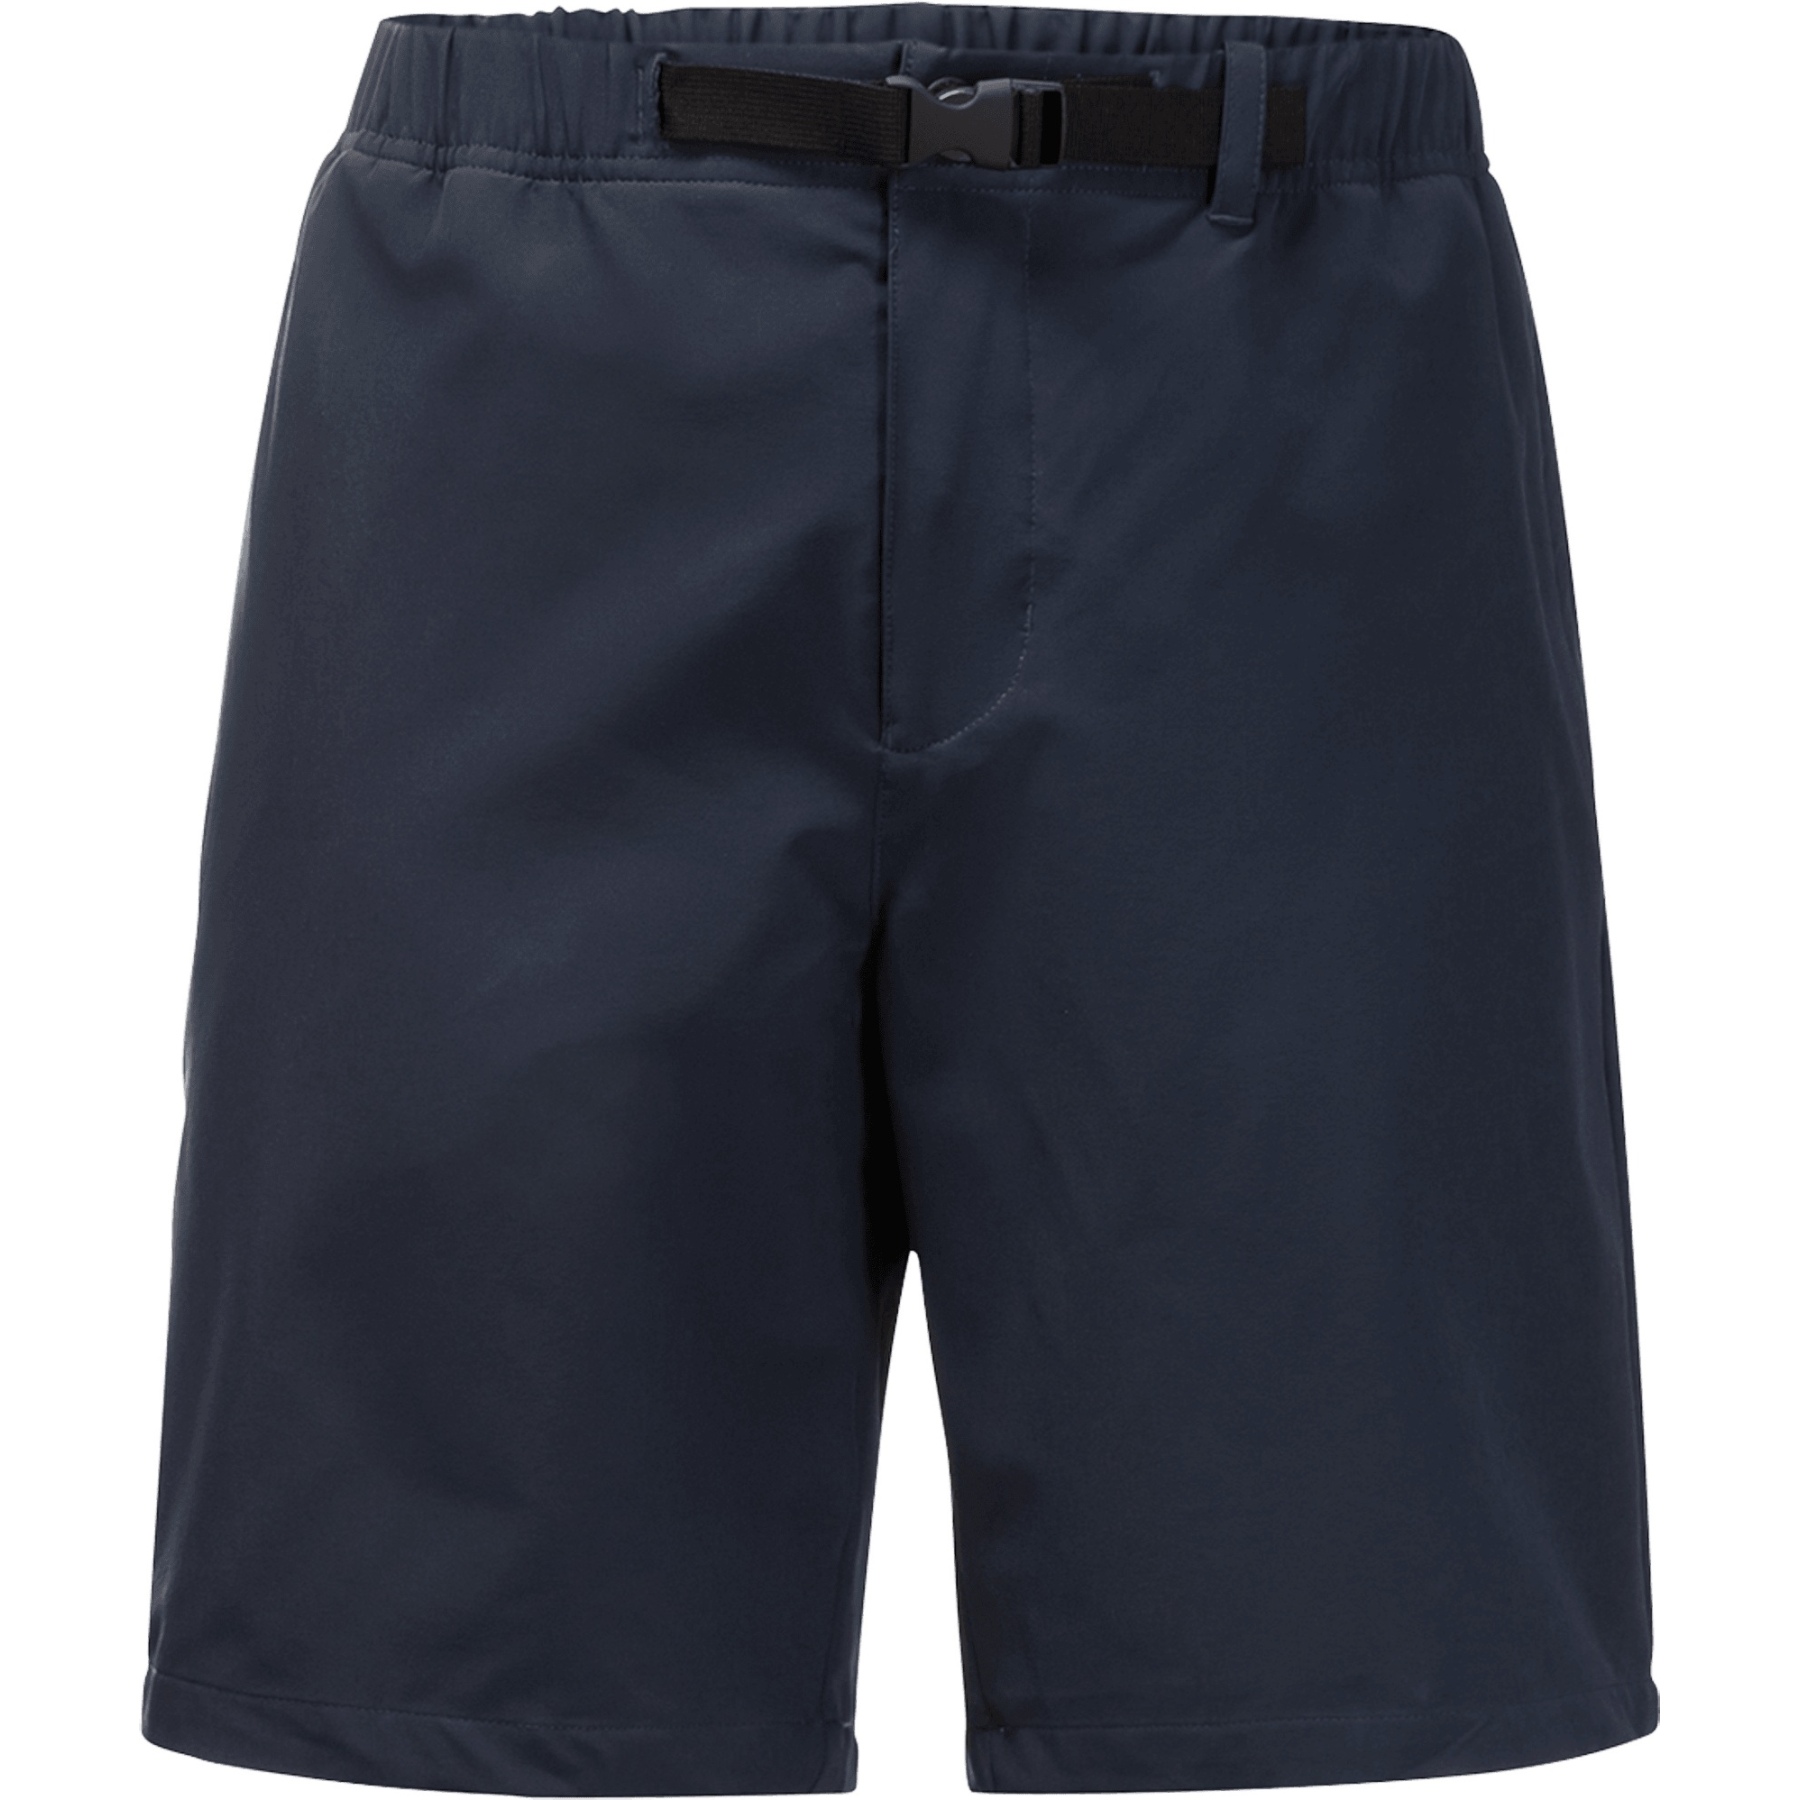 Picture of Jack Wolfskin Summer Lifestyle Shorts Men - night blue